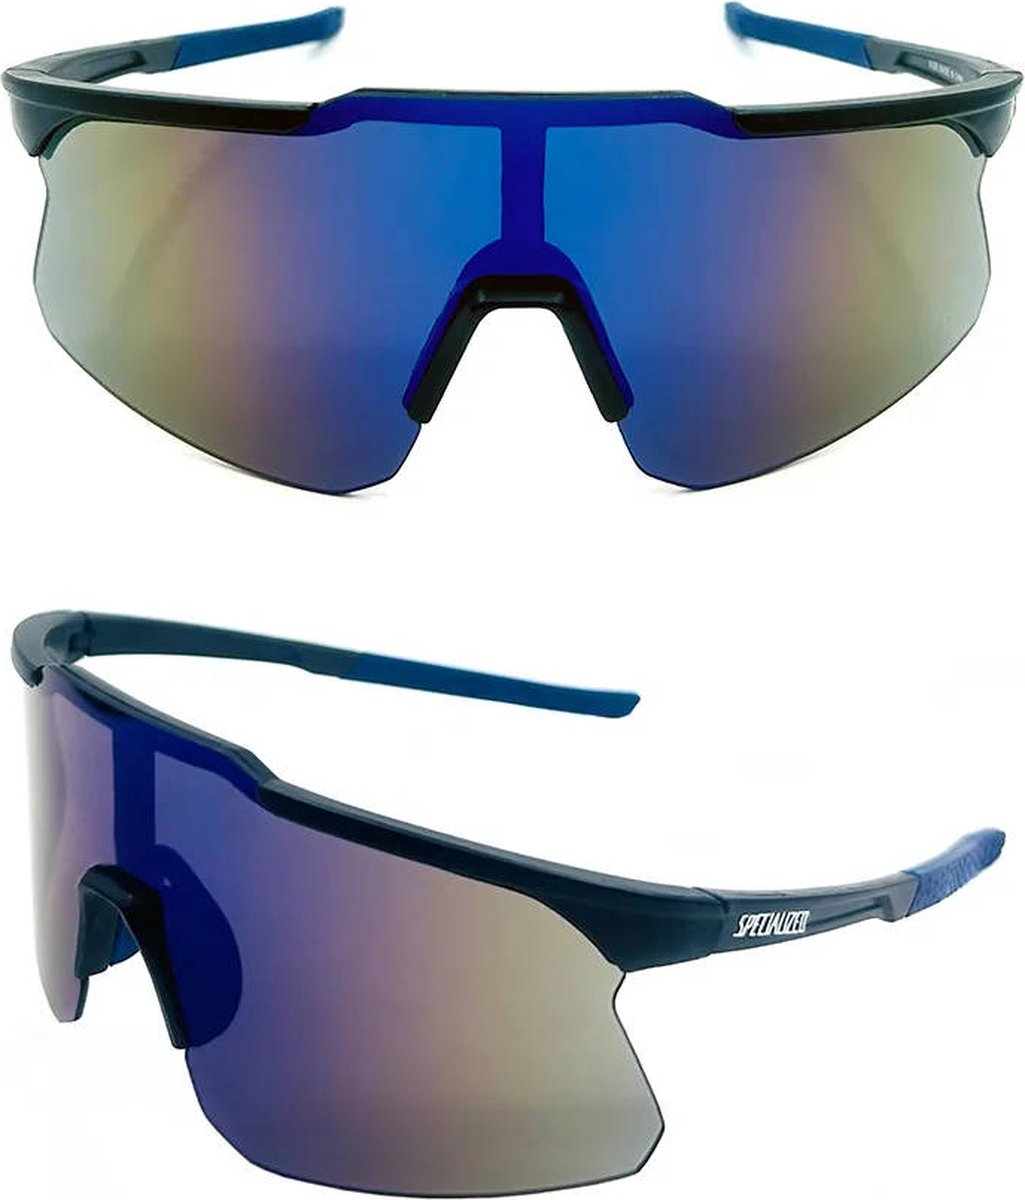 Specialized Fietsbril - Racefiets - Sportbril - Mountainbike - Unisex - UV-bescherming - 155mm - Zwart Paars